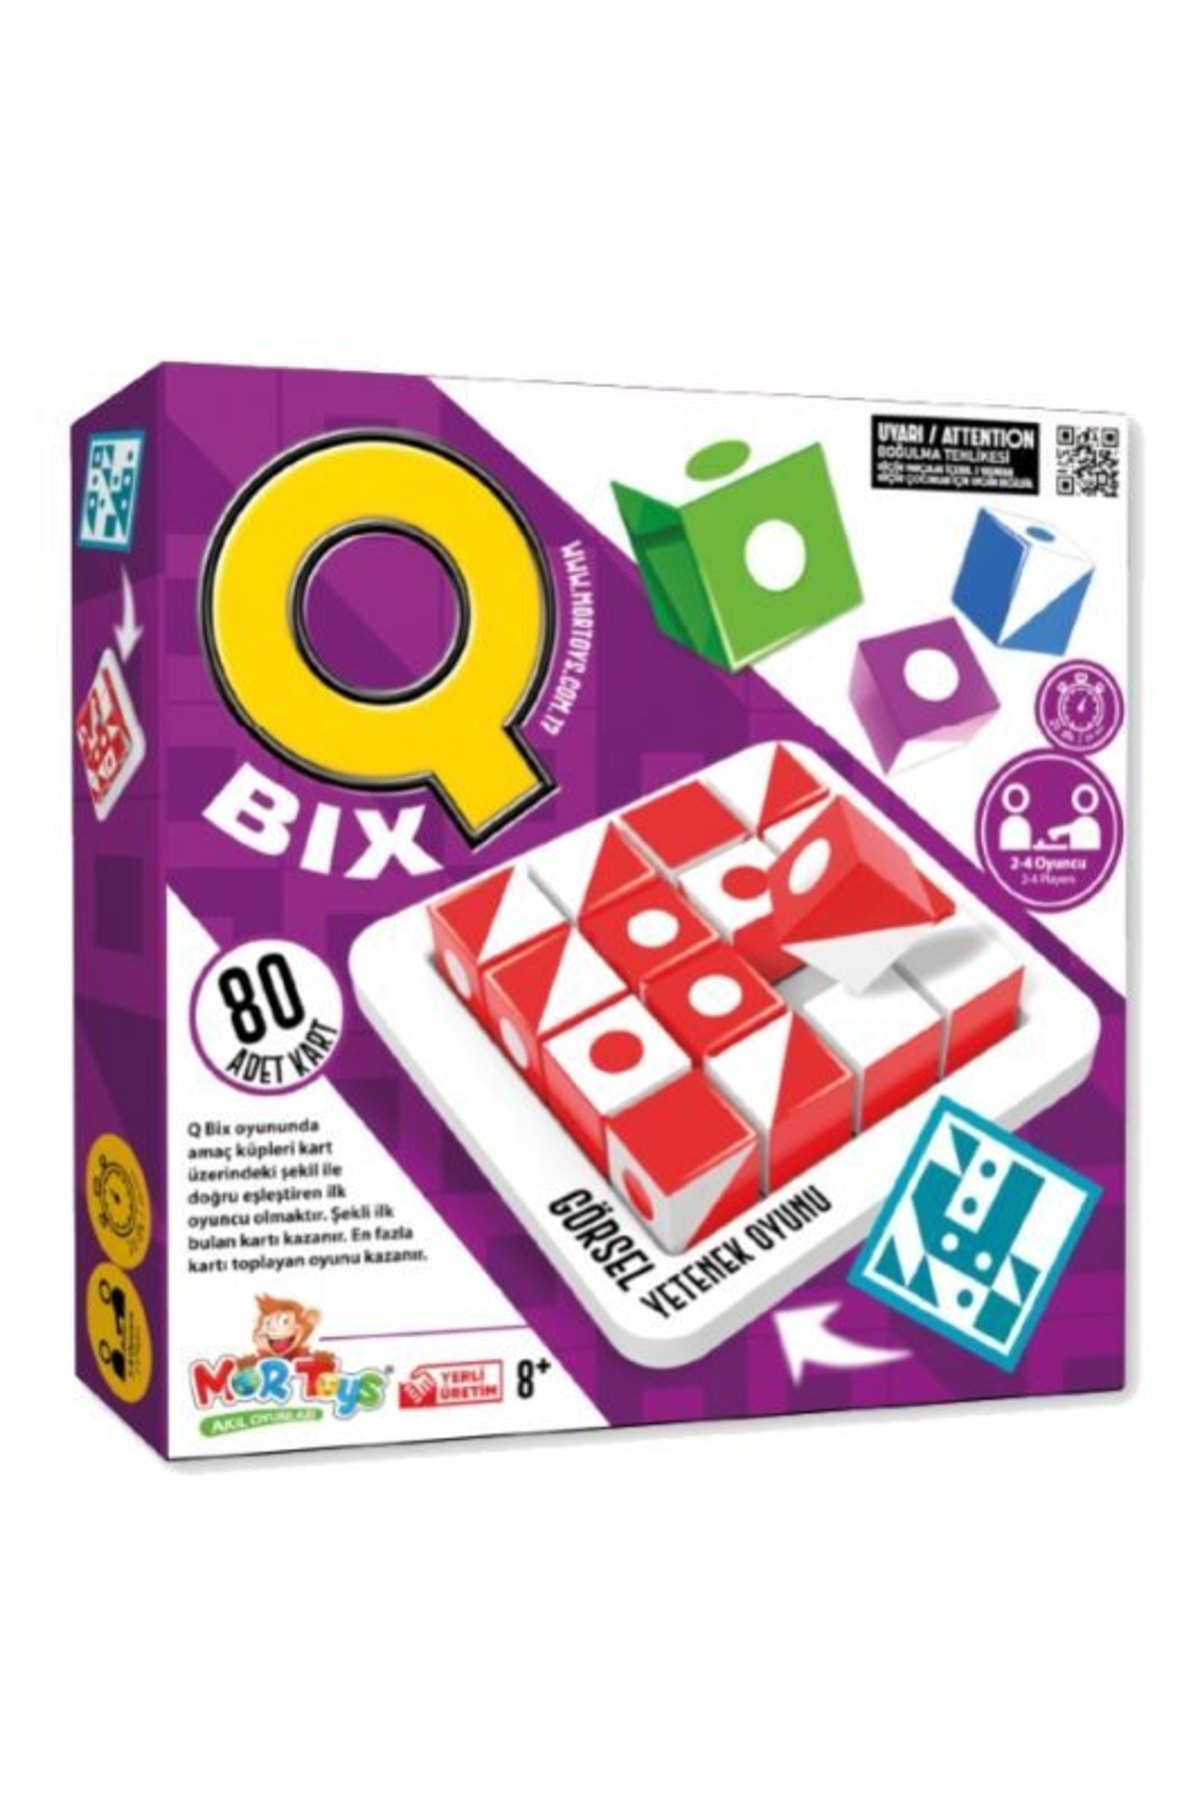 Mor Toys Qbix Oyunu Q Bix Akıl Ve Zeka Okul Turnuva Oyunu Q-bitz